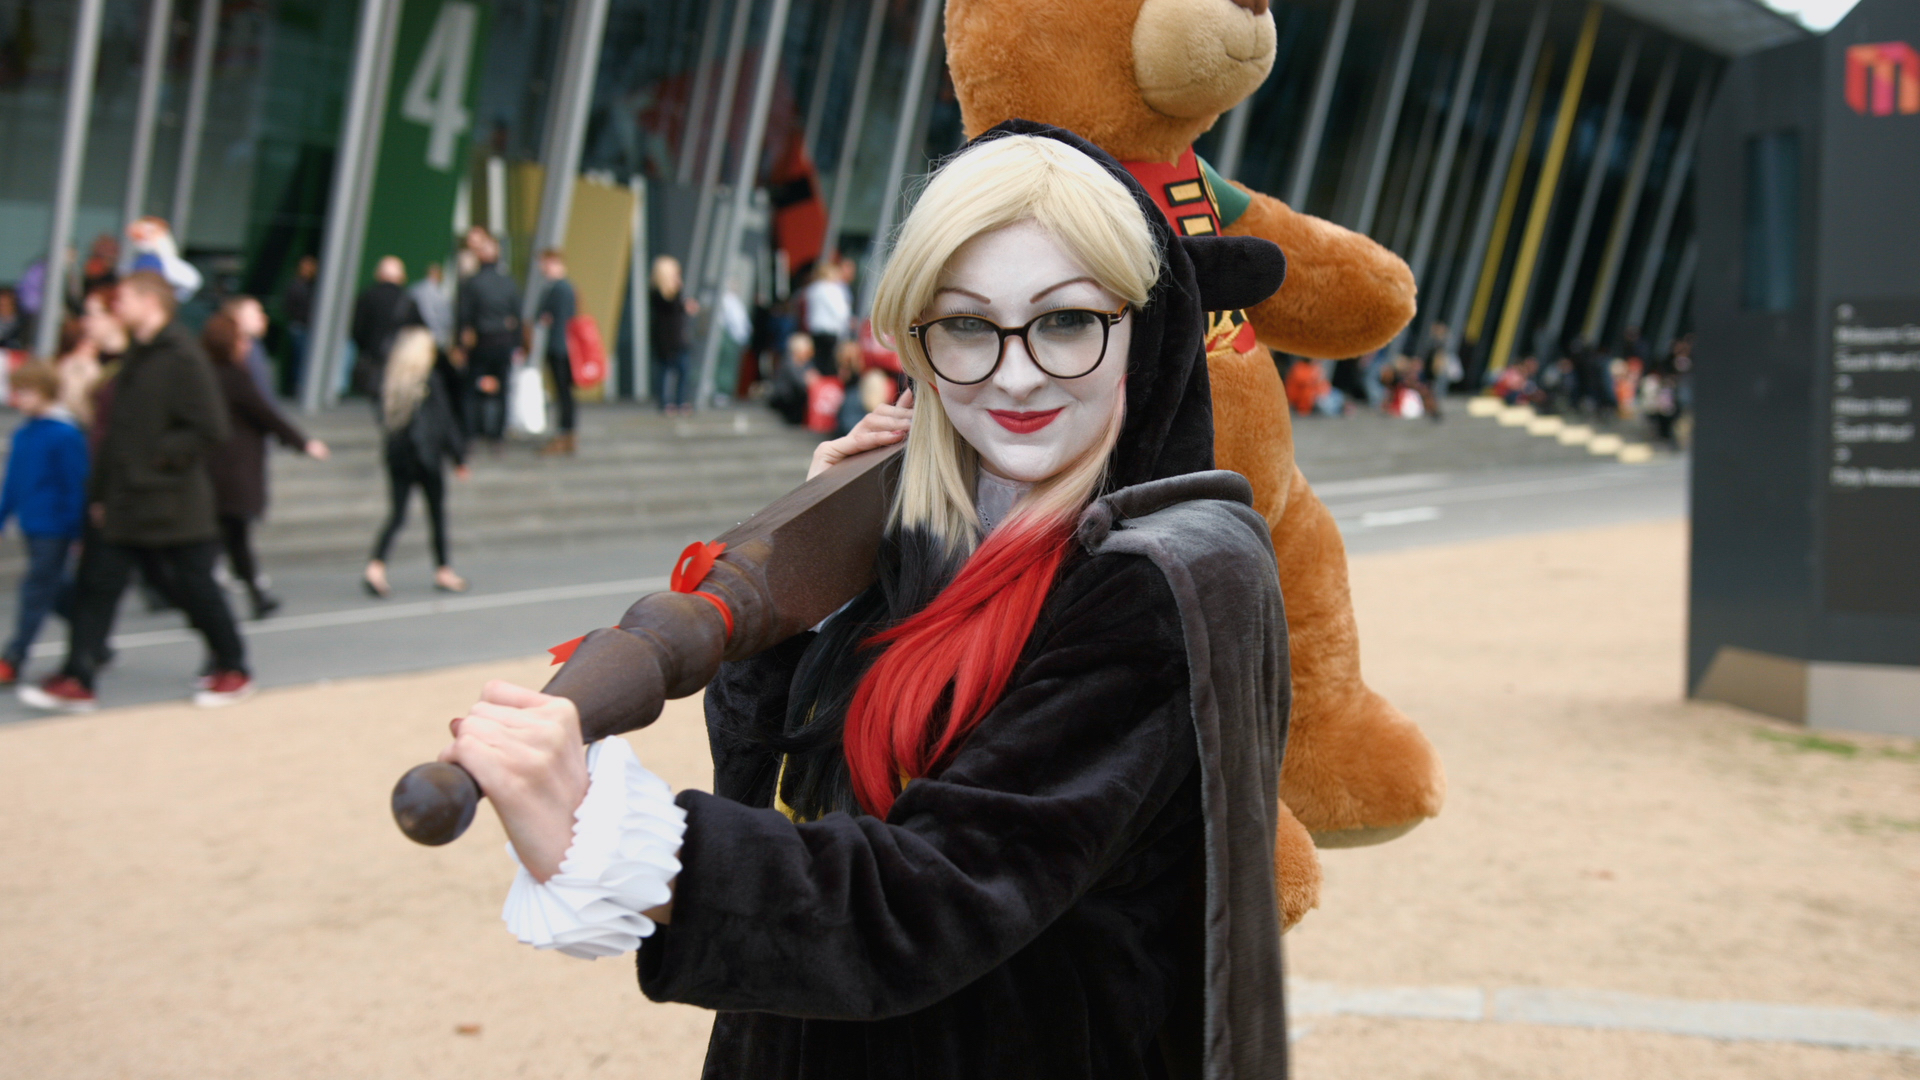 Harley Quinn cosplayer wearing a black bear onesie wielding a table leg bearing a stuffed bear dressed as Robin.